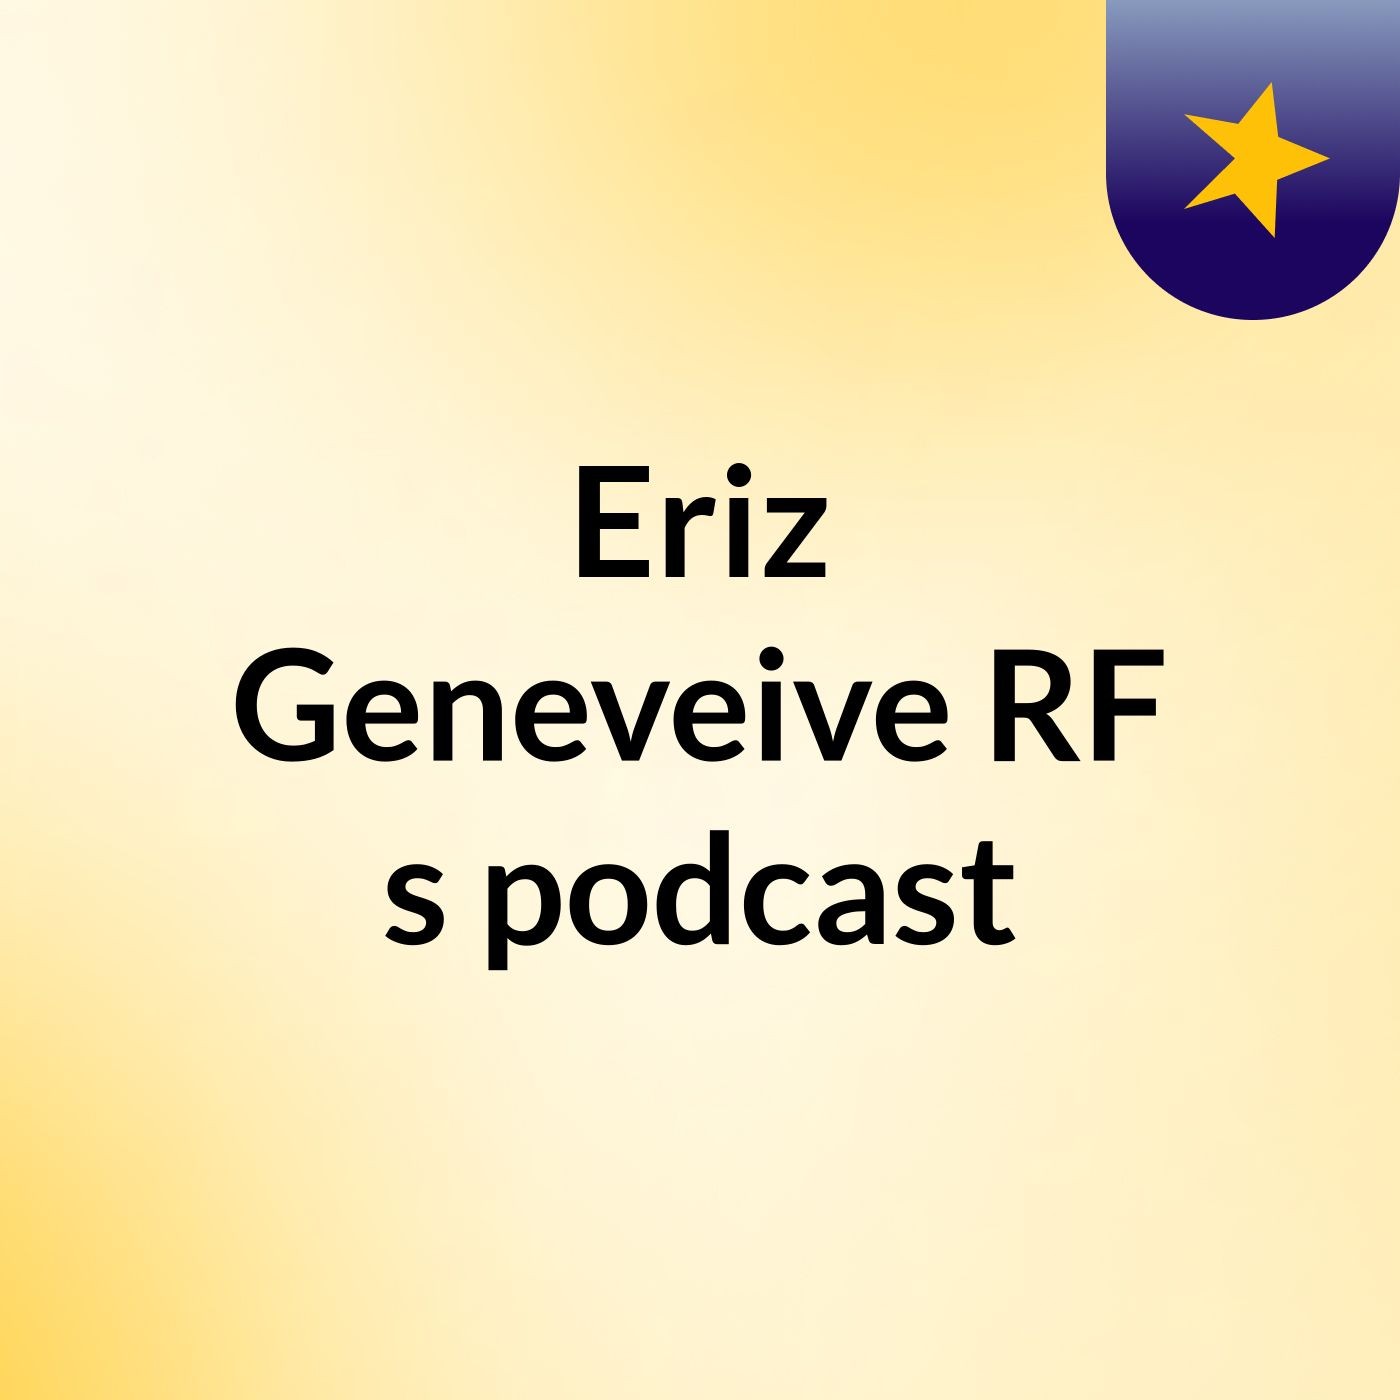 Eriz Geneveive RF's podcast